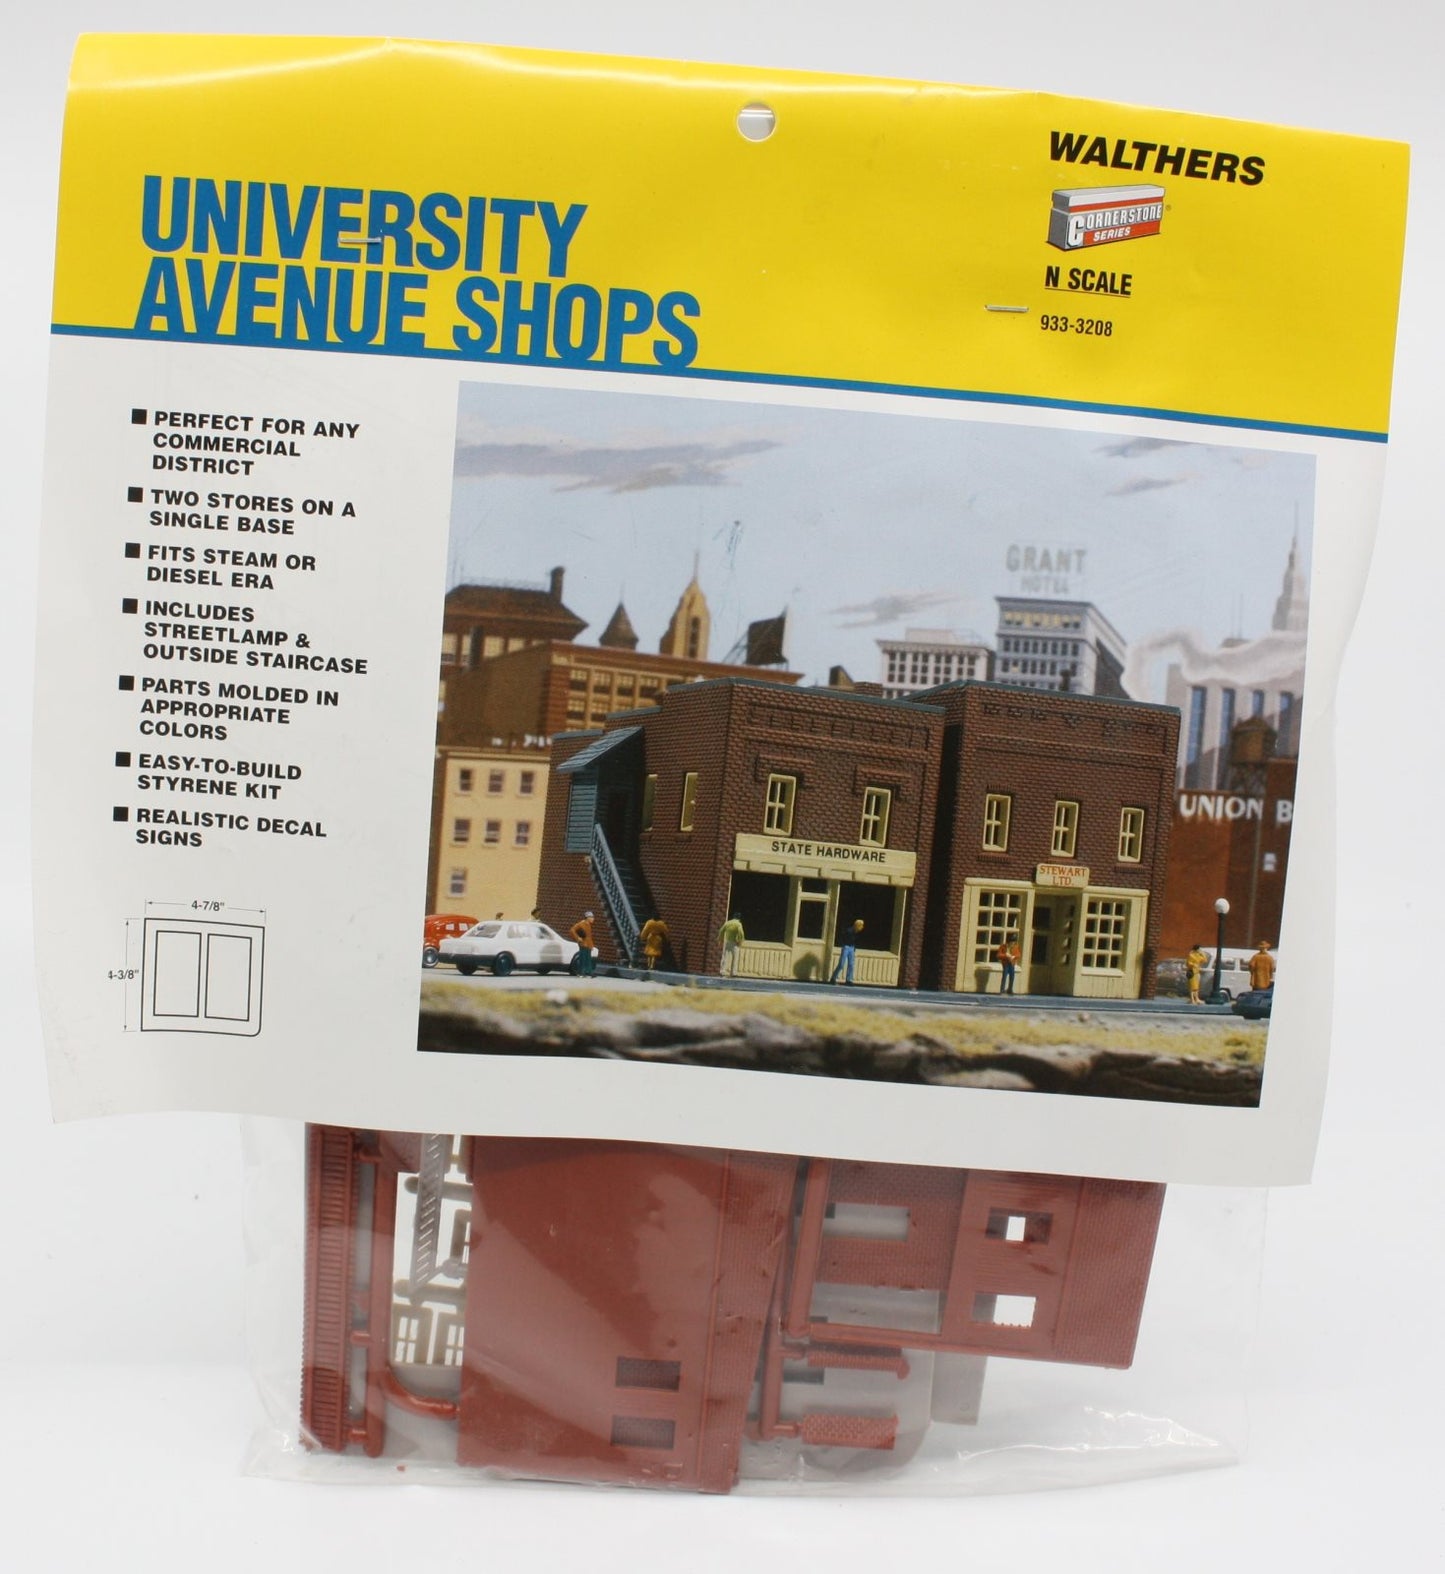 Walthers 933-3208 N University Avenue Shops Building Kit